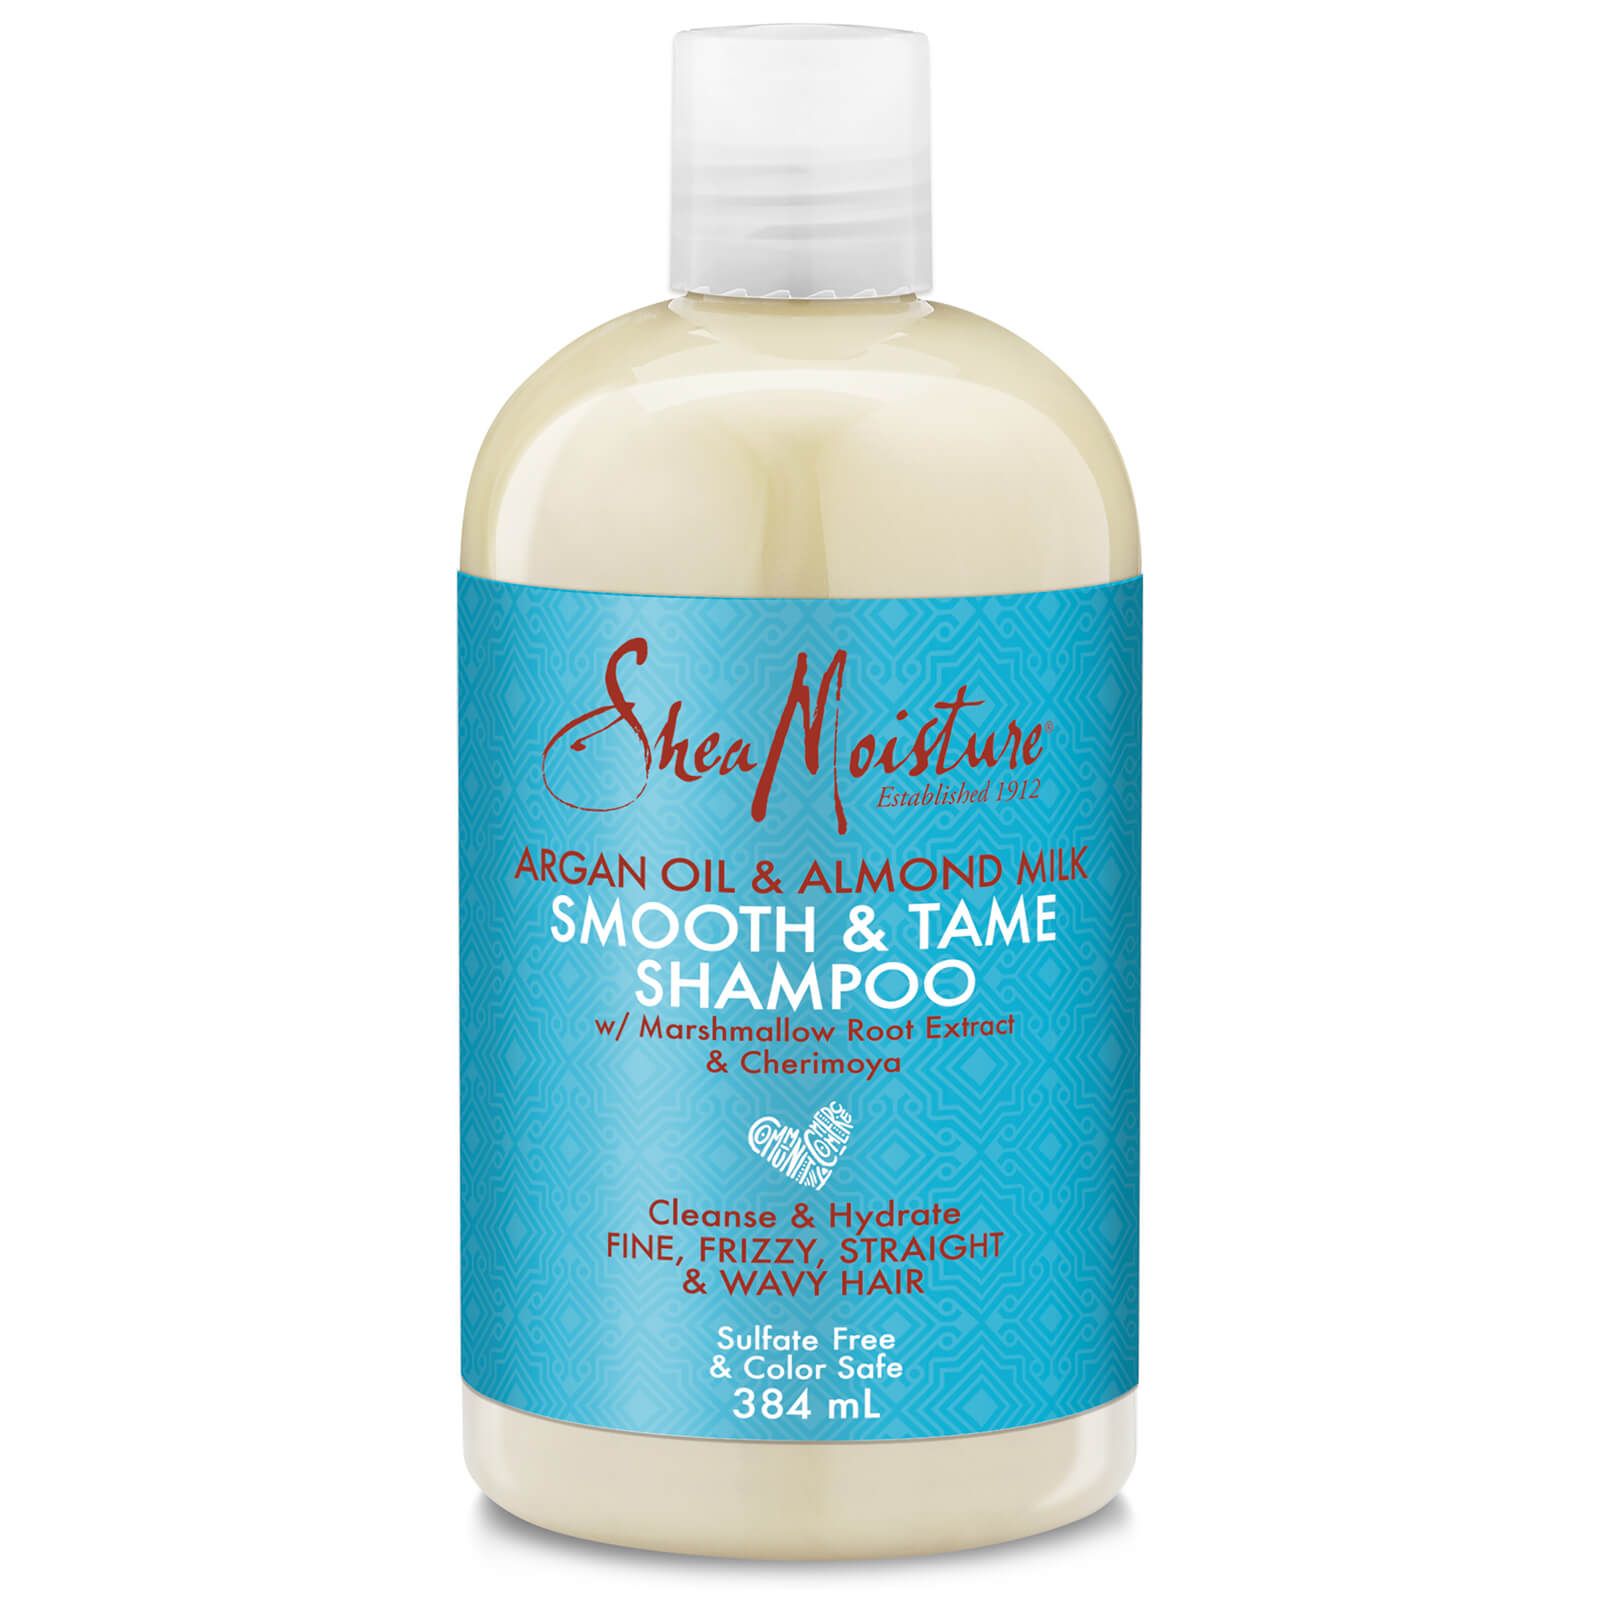 Shea Moisture Argan Oil and Almond Milk Shampoo 384 ml von SheaMoisture